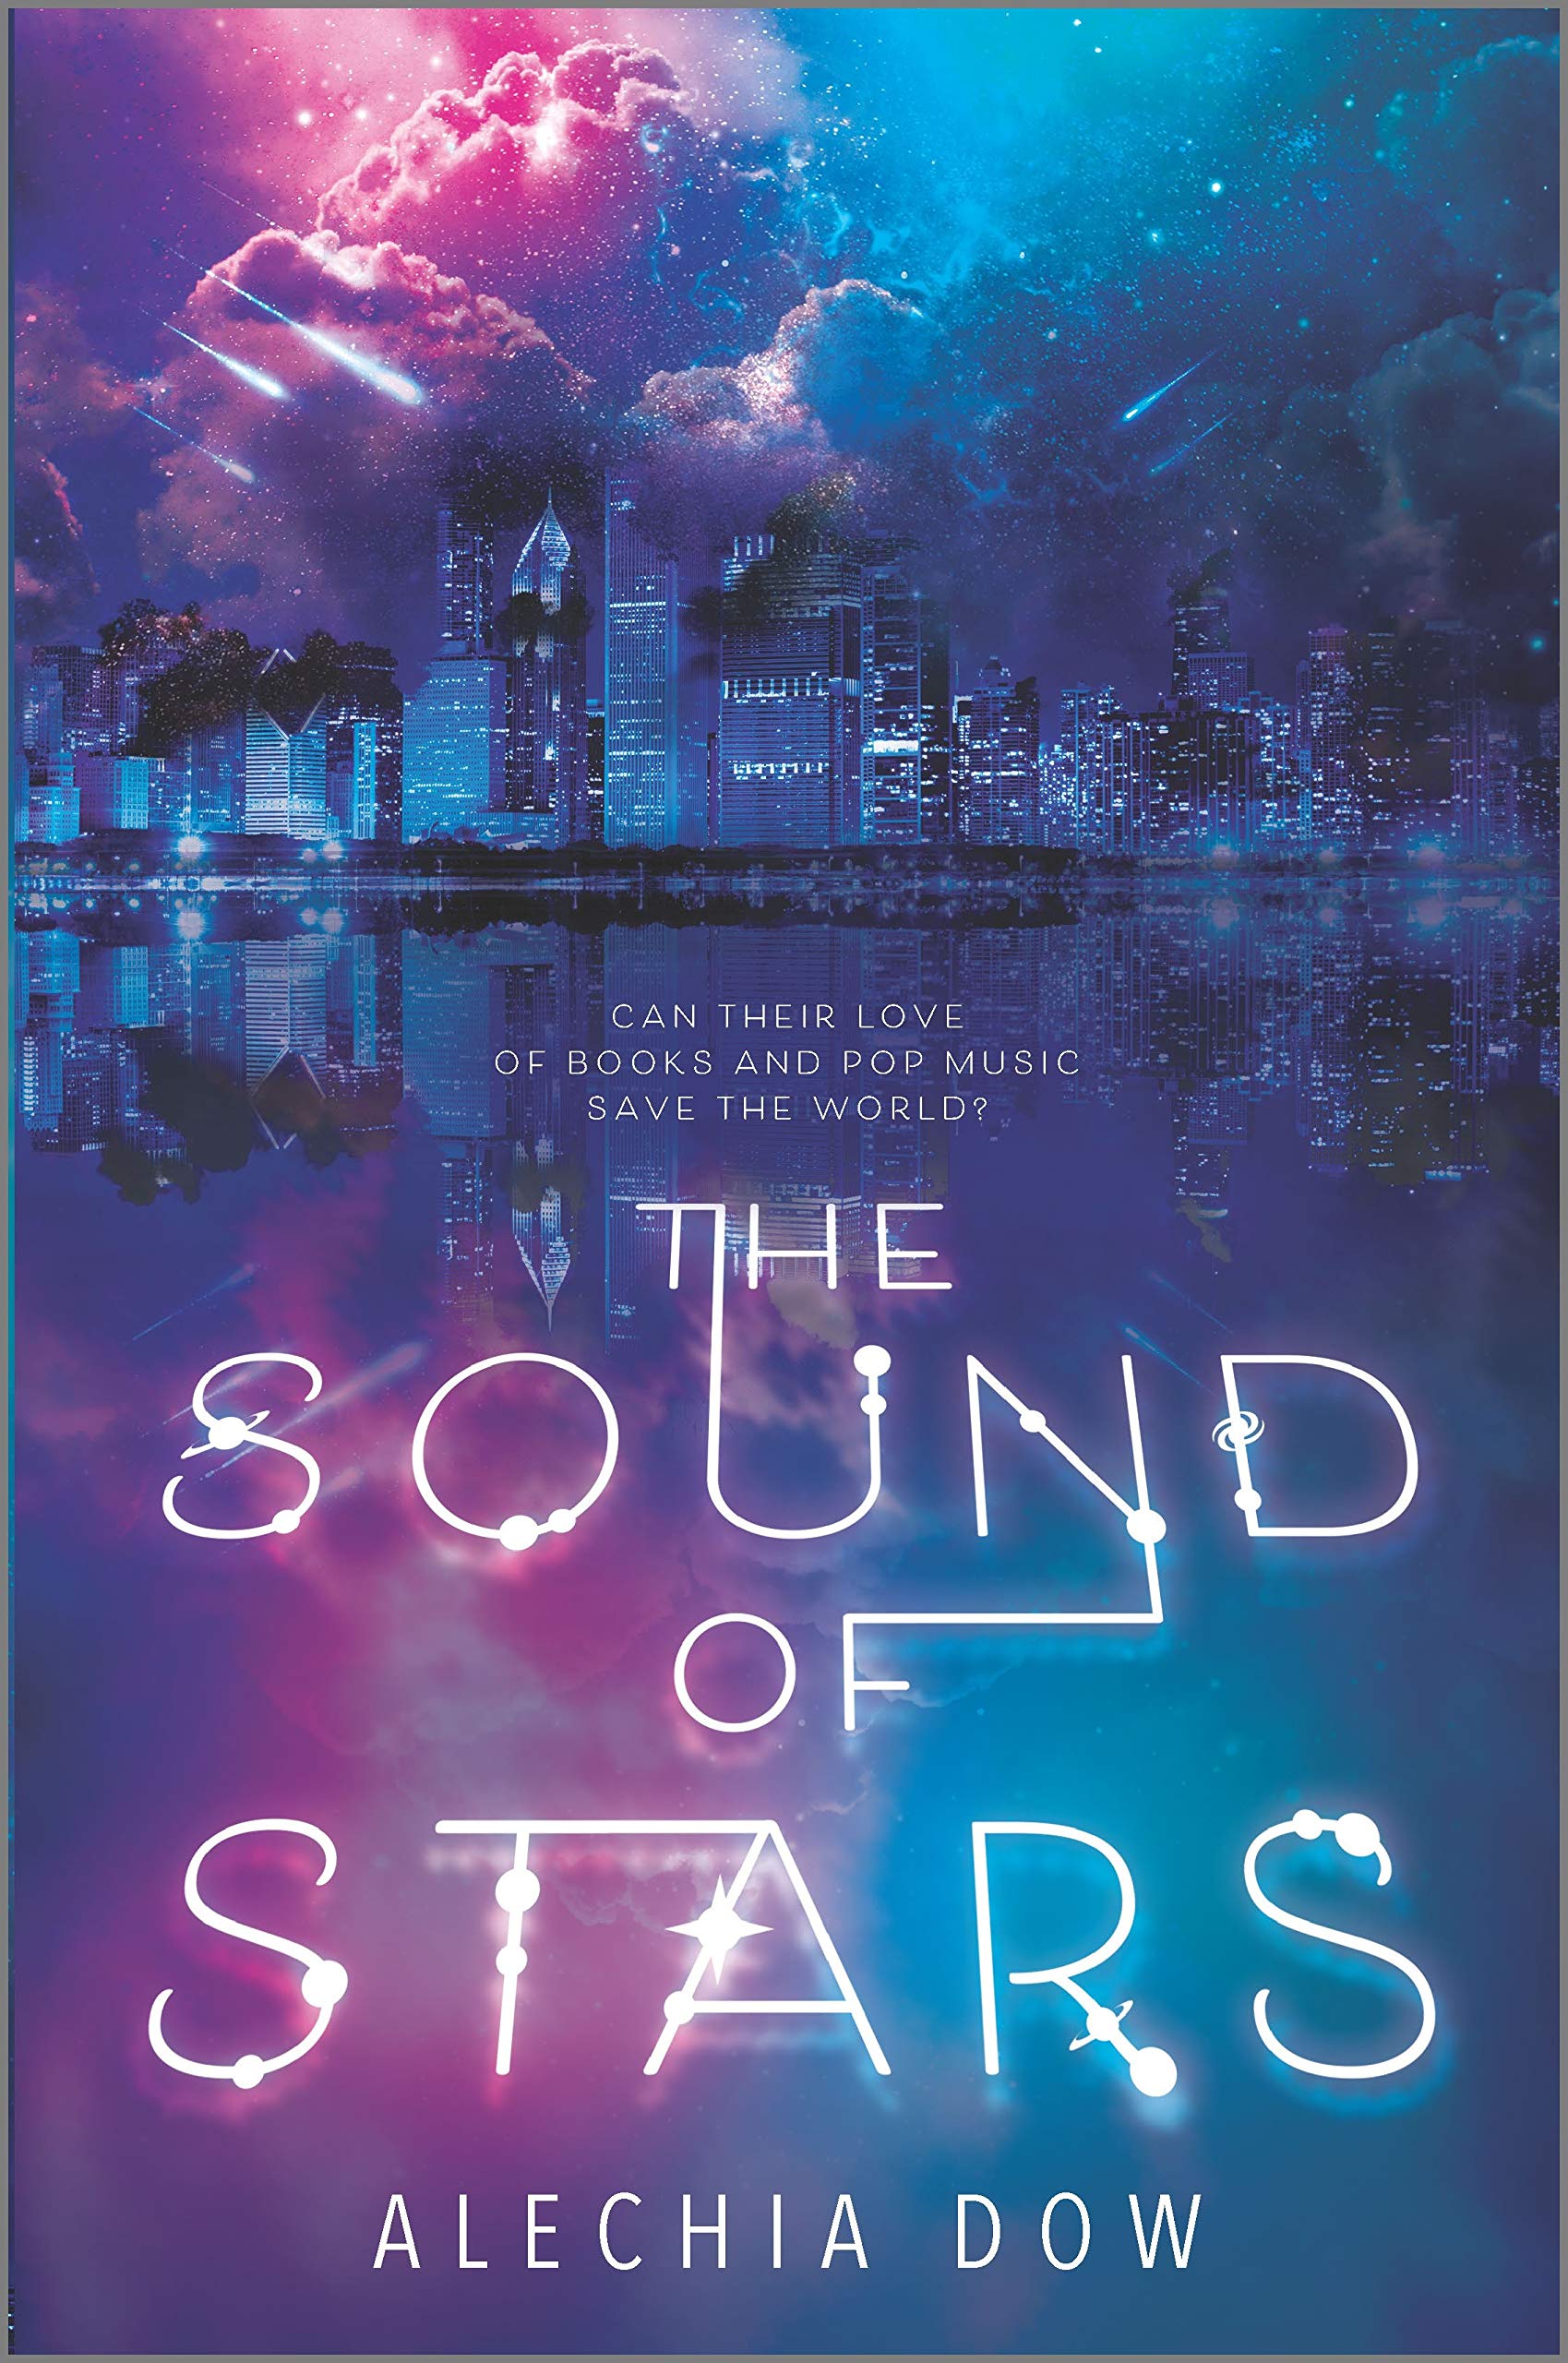 The Sound of Stars